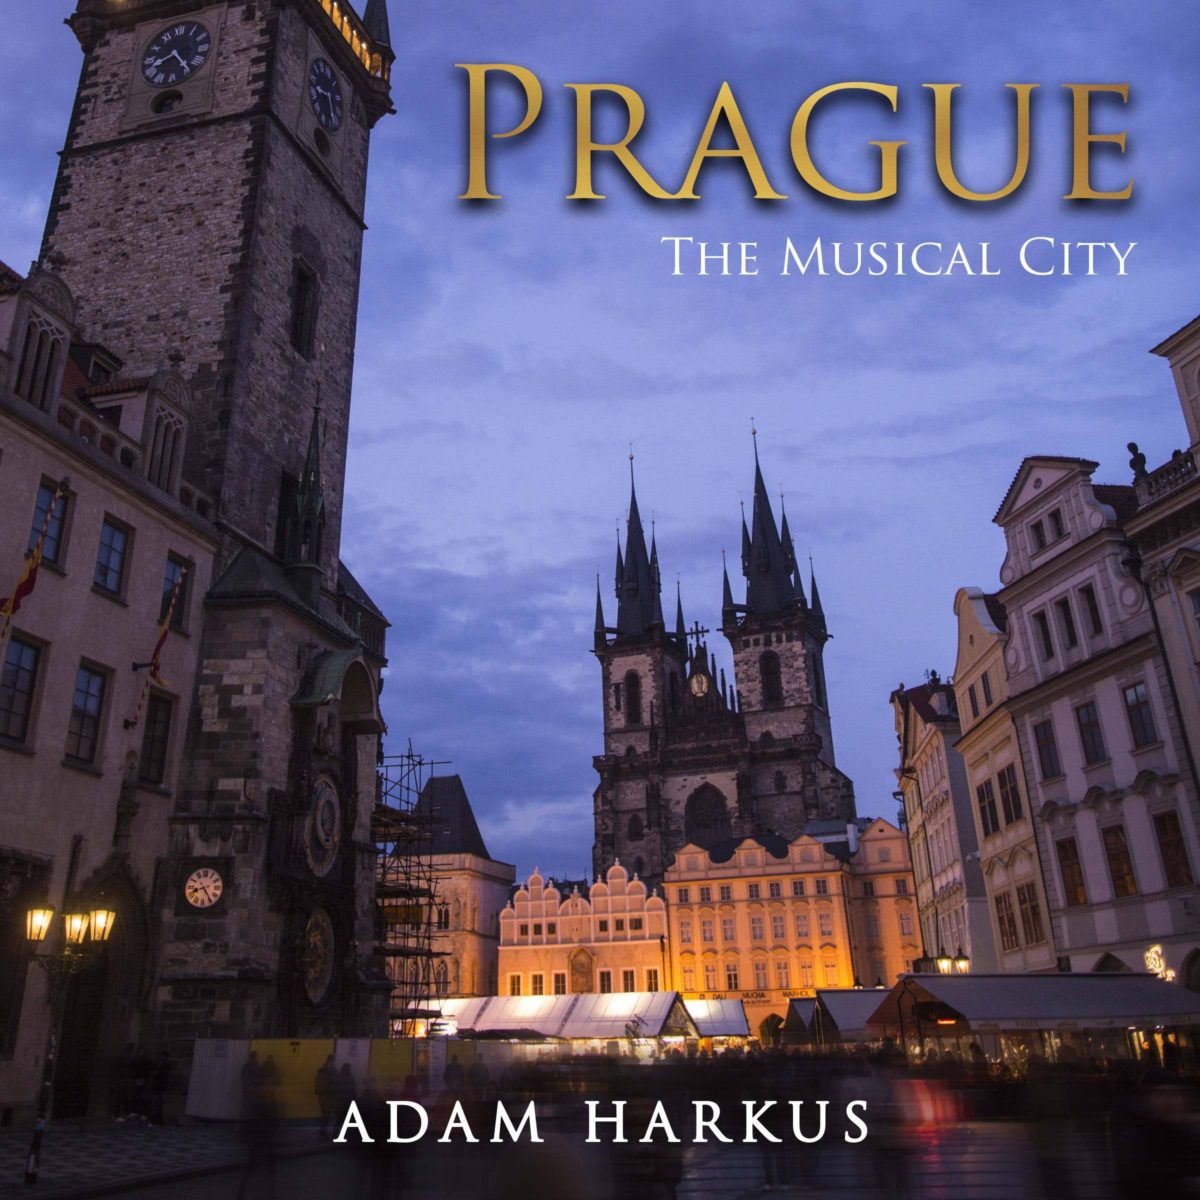 Prague: The Musical City. Out Now on eBook & Paperback! The Blogging Musician @ adamharkus.com